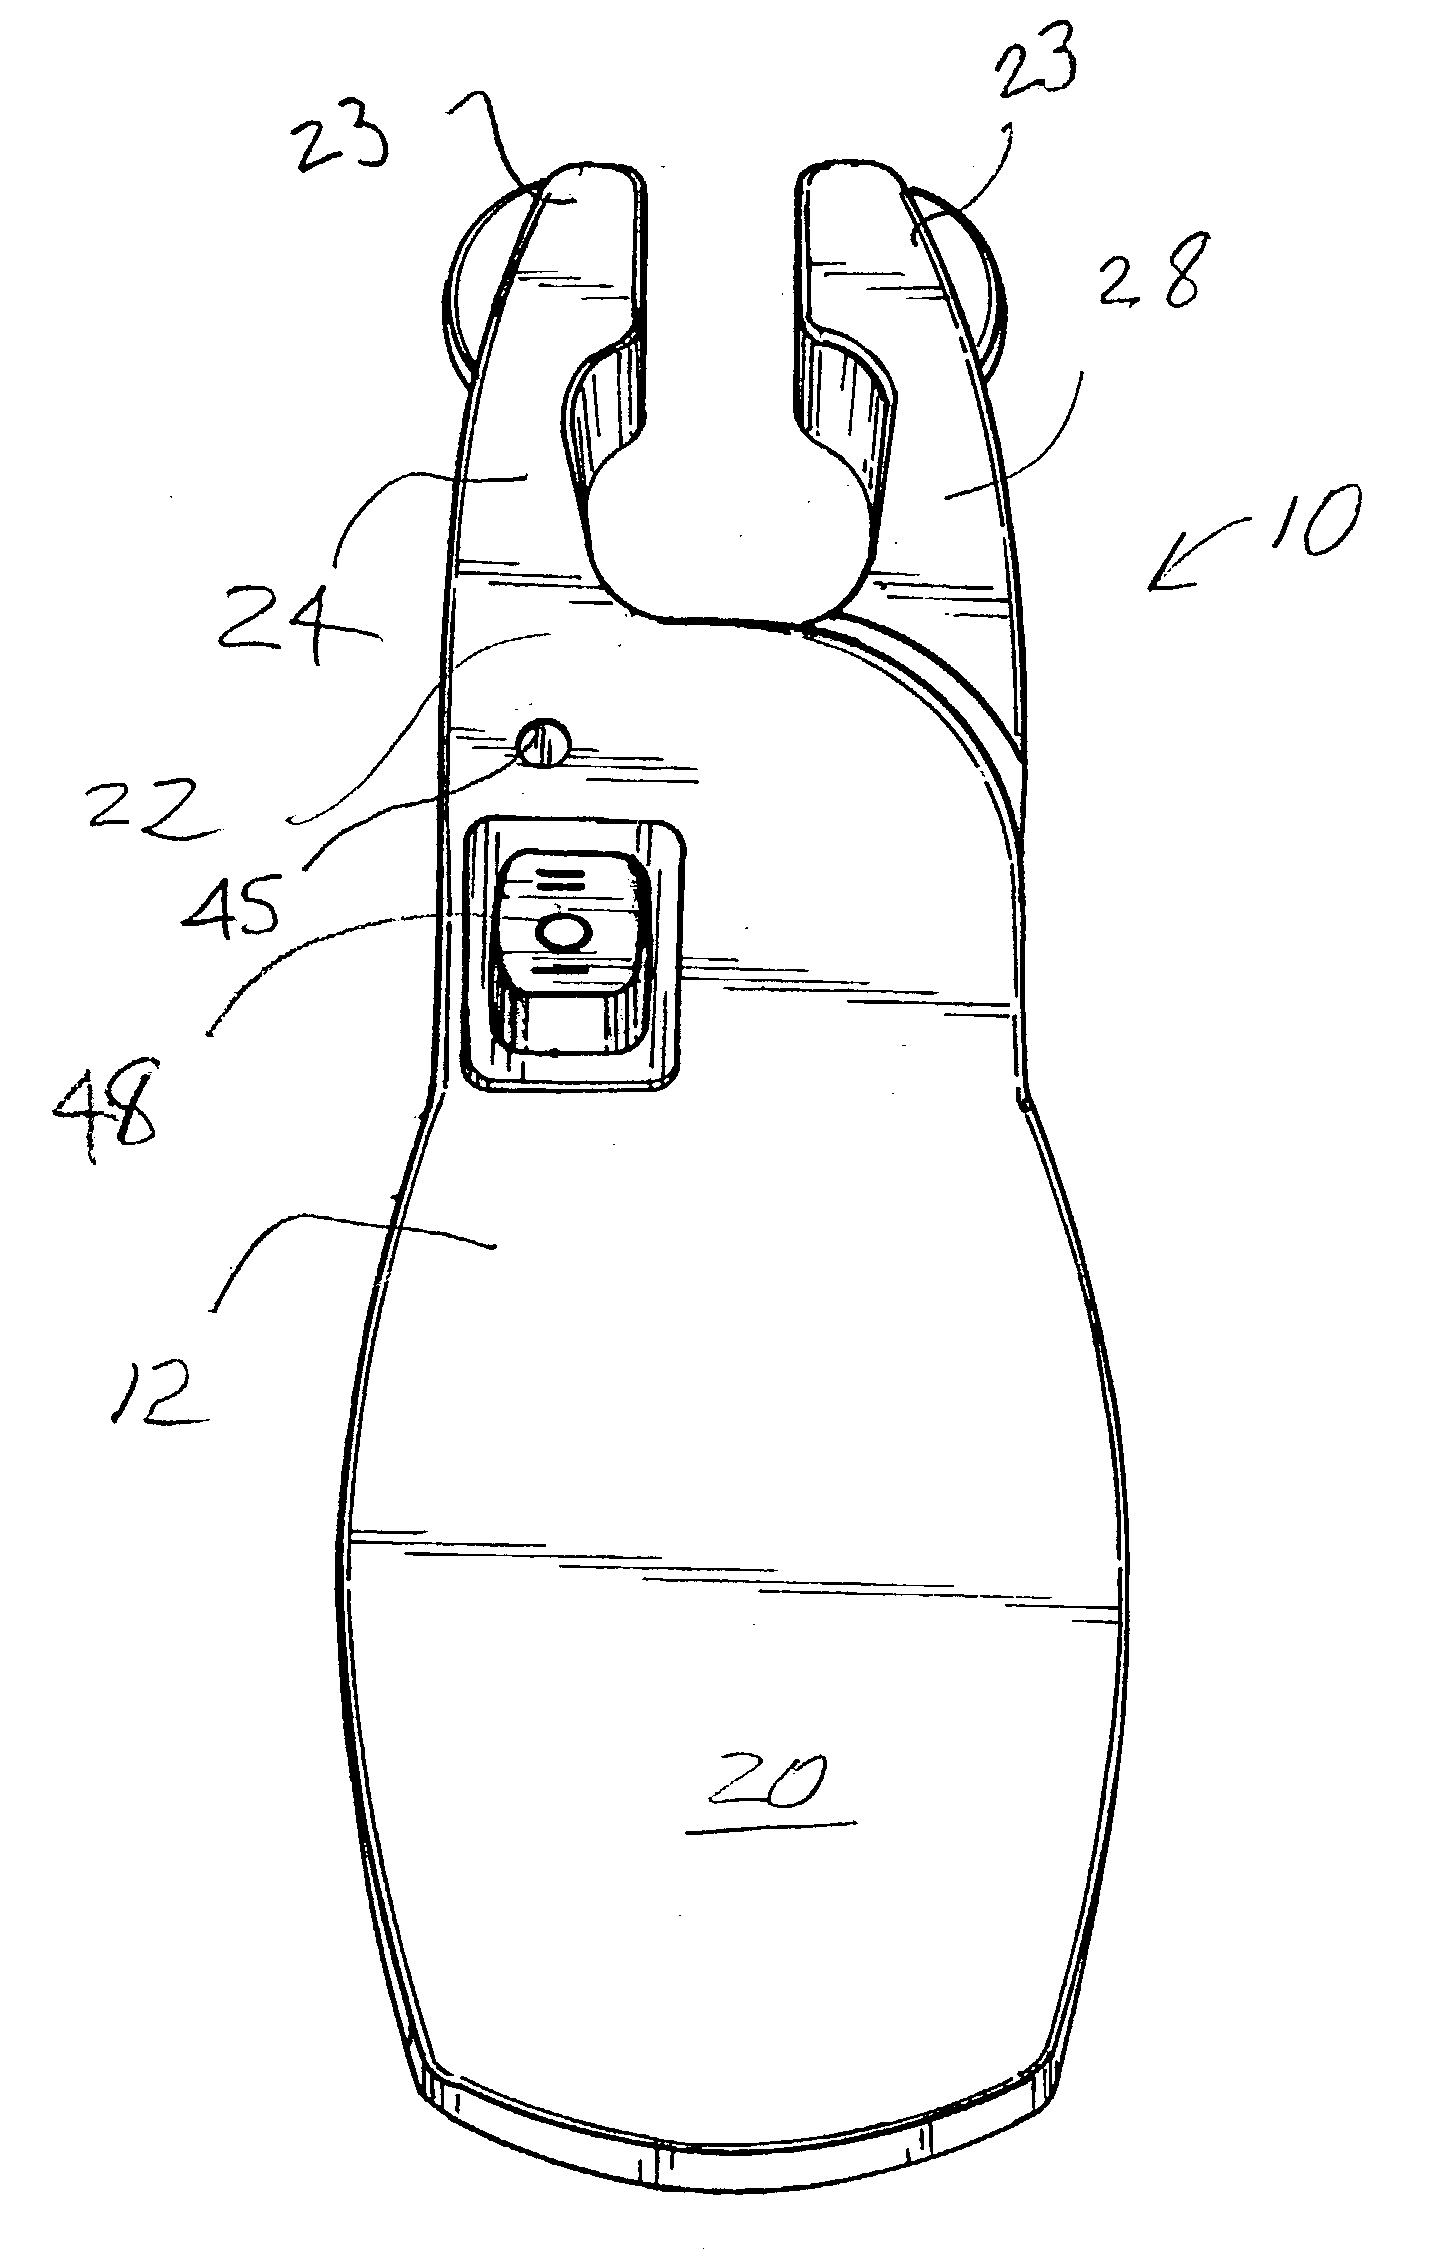 Venoscope apparatus